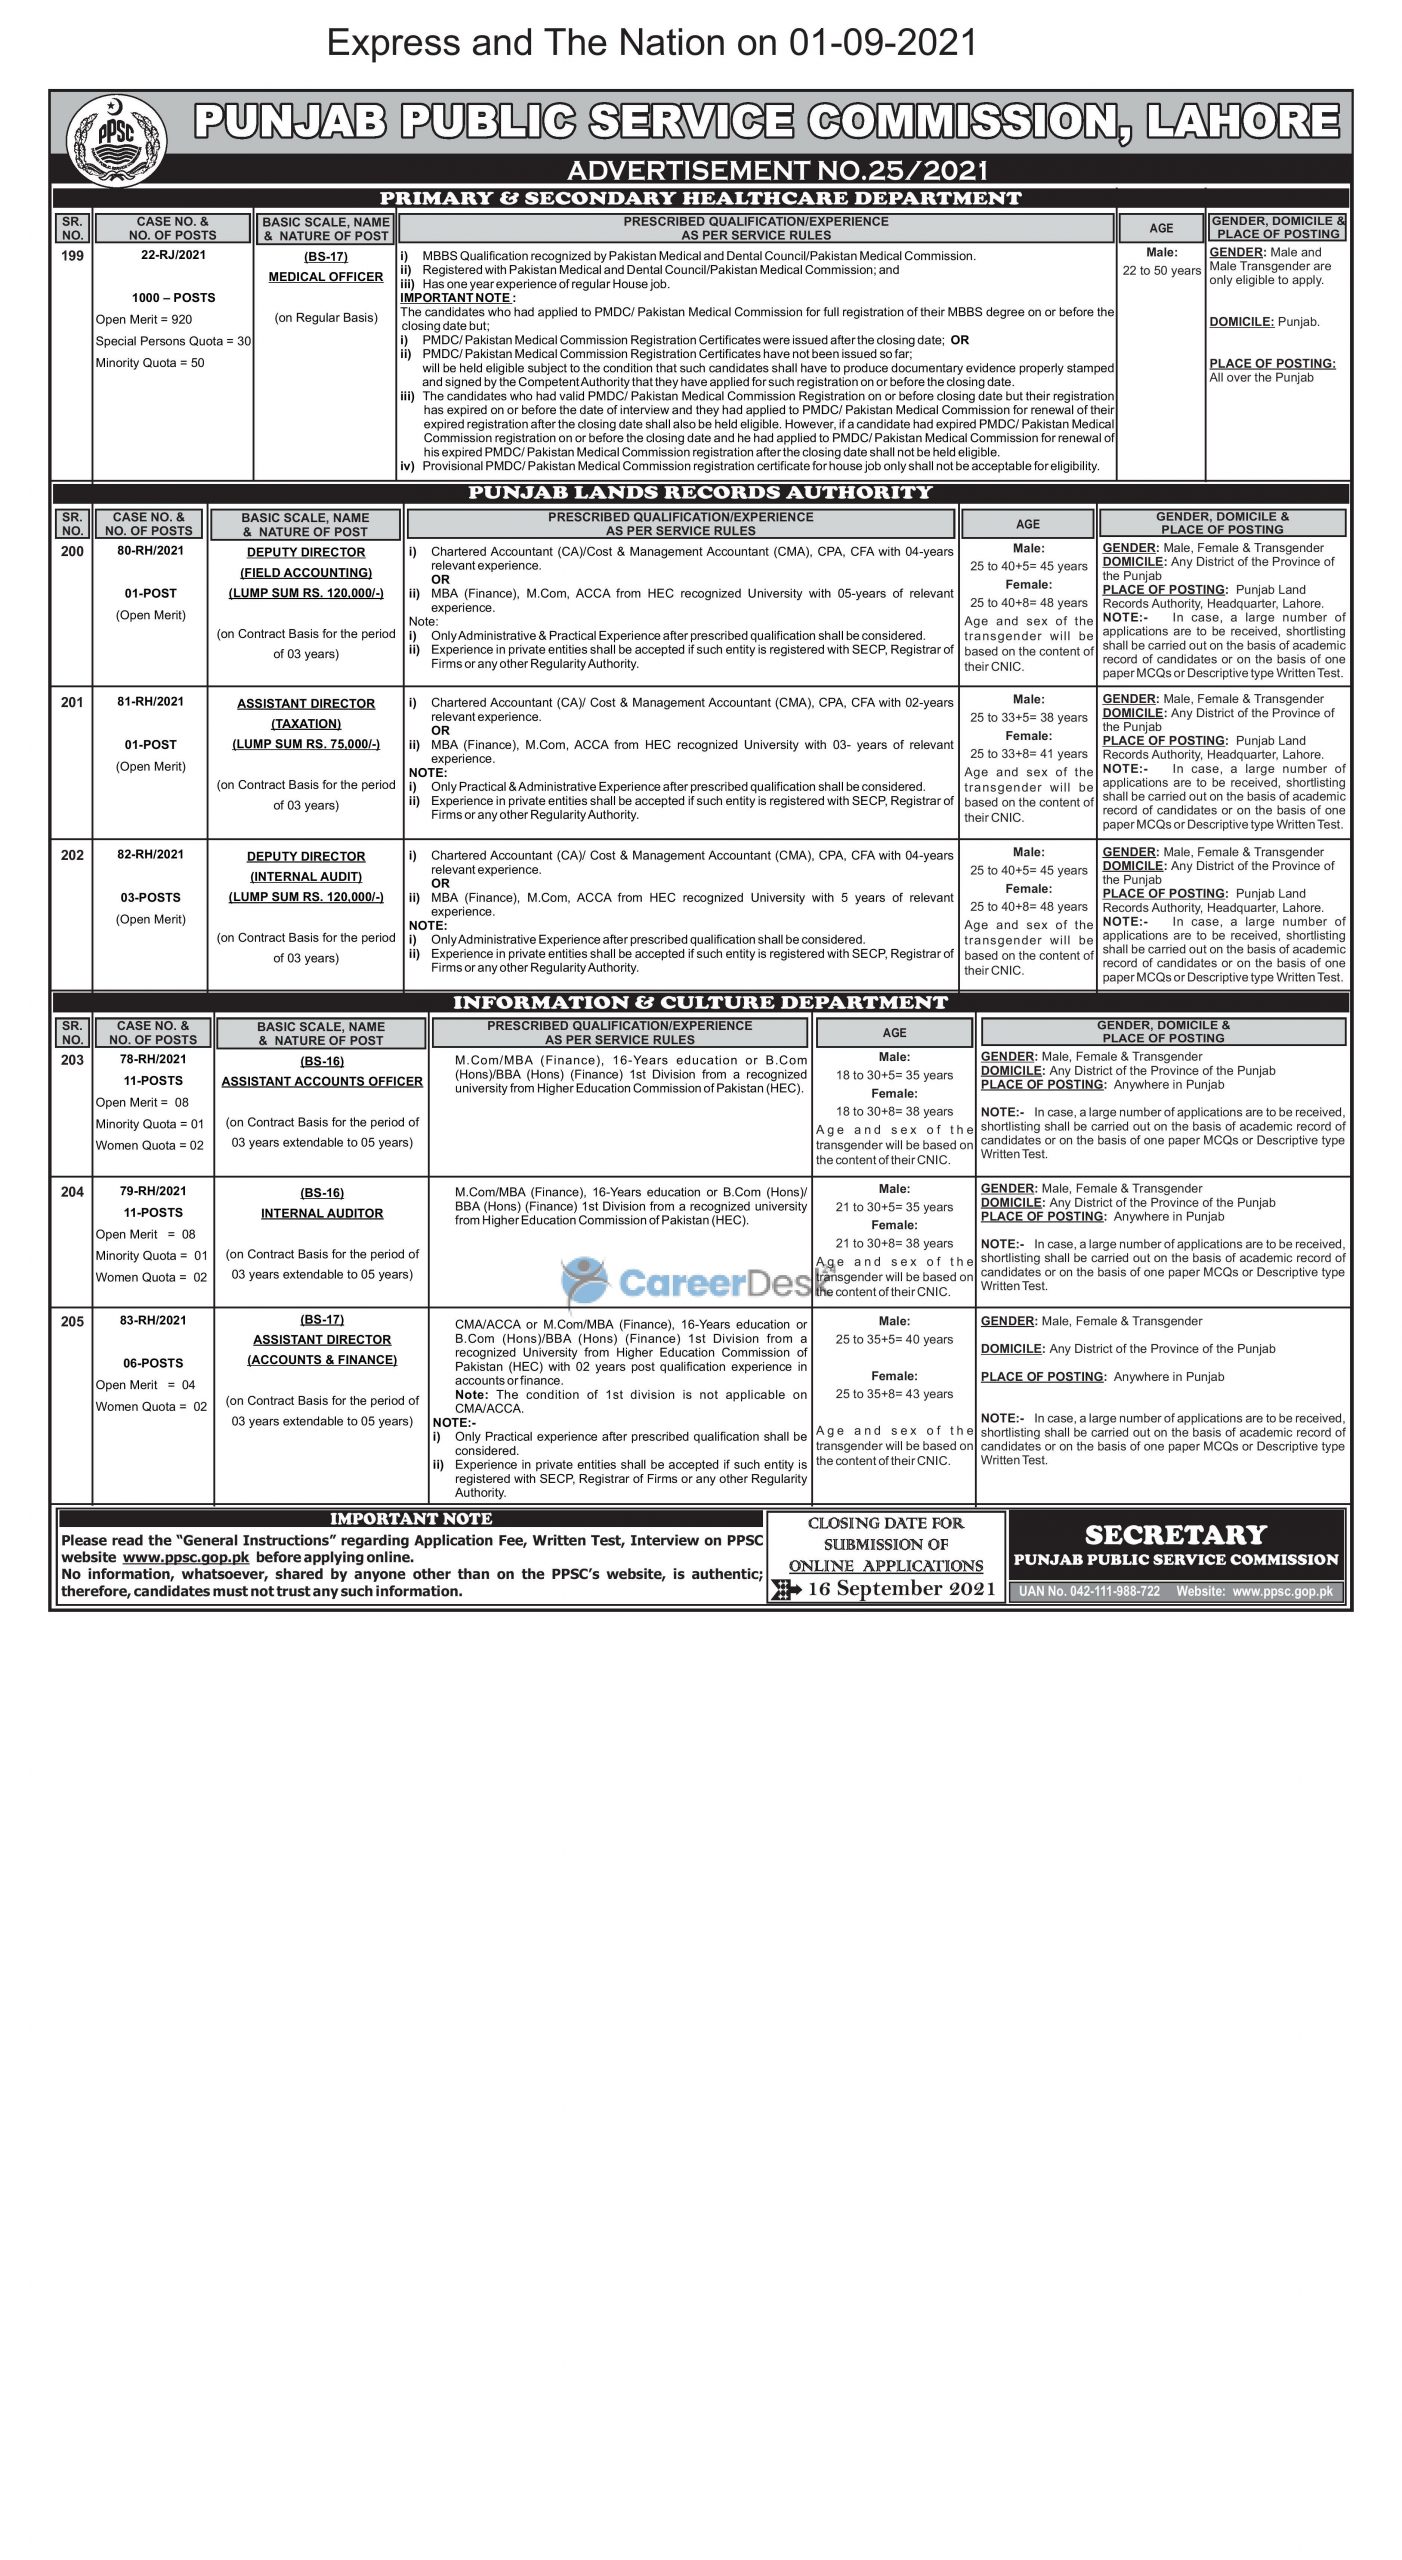 PPSC Punjab Public Service Commission New Jobs 2021 Adv No 25/2021